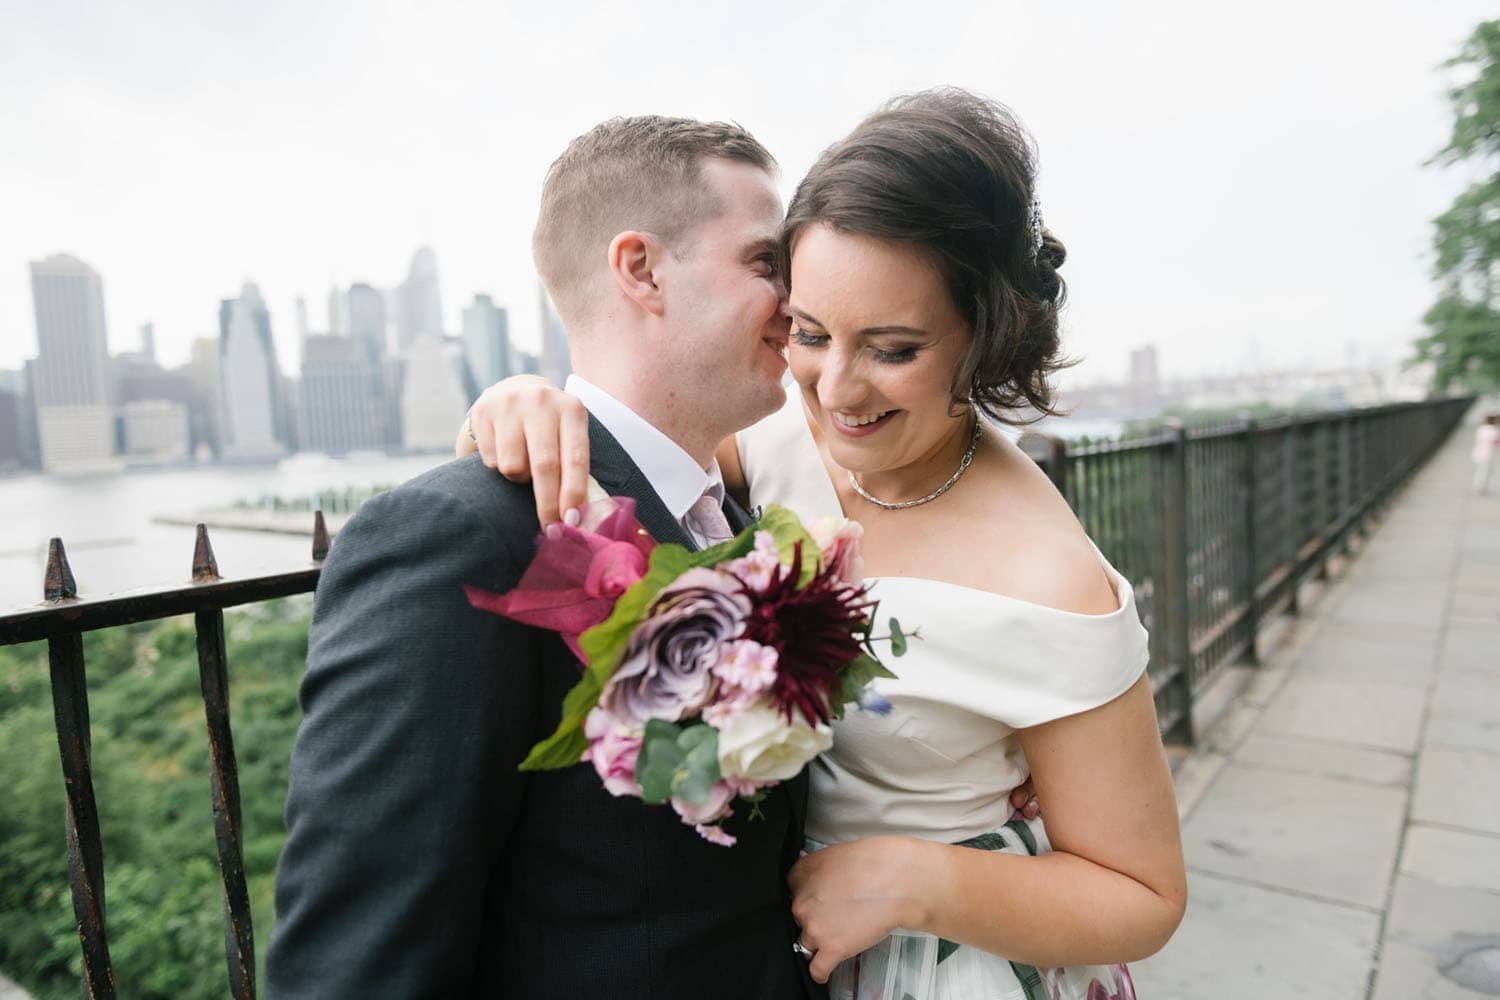 NYC elopement locations: brooklyn heights promenade wedding